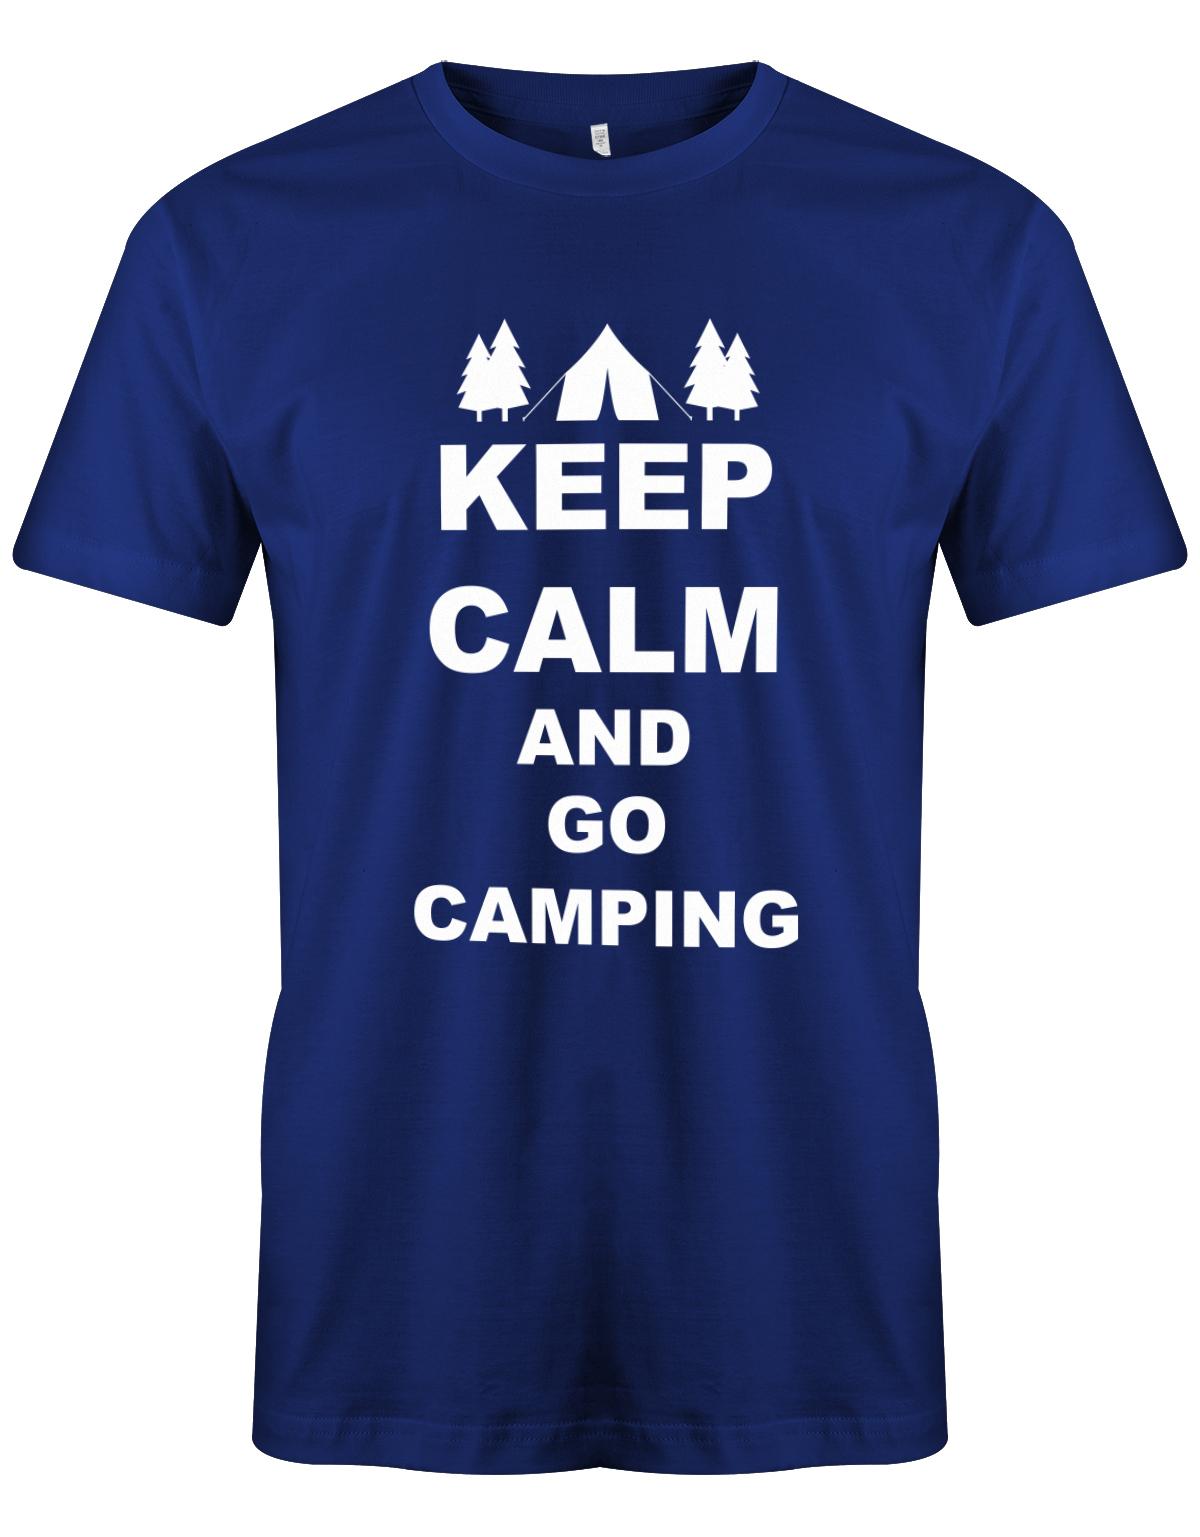 Keep-Calm-and-Go-Camping-Herren-Shirt-royalblau